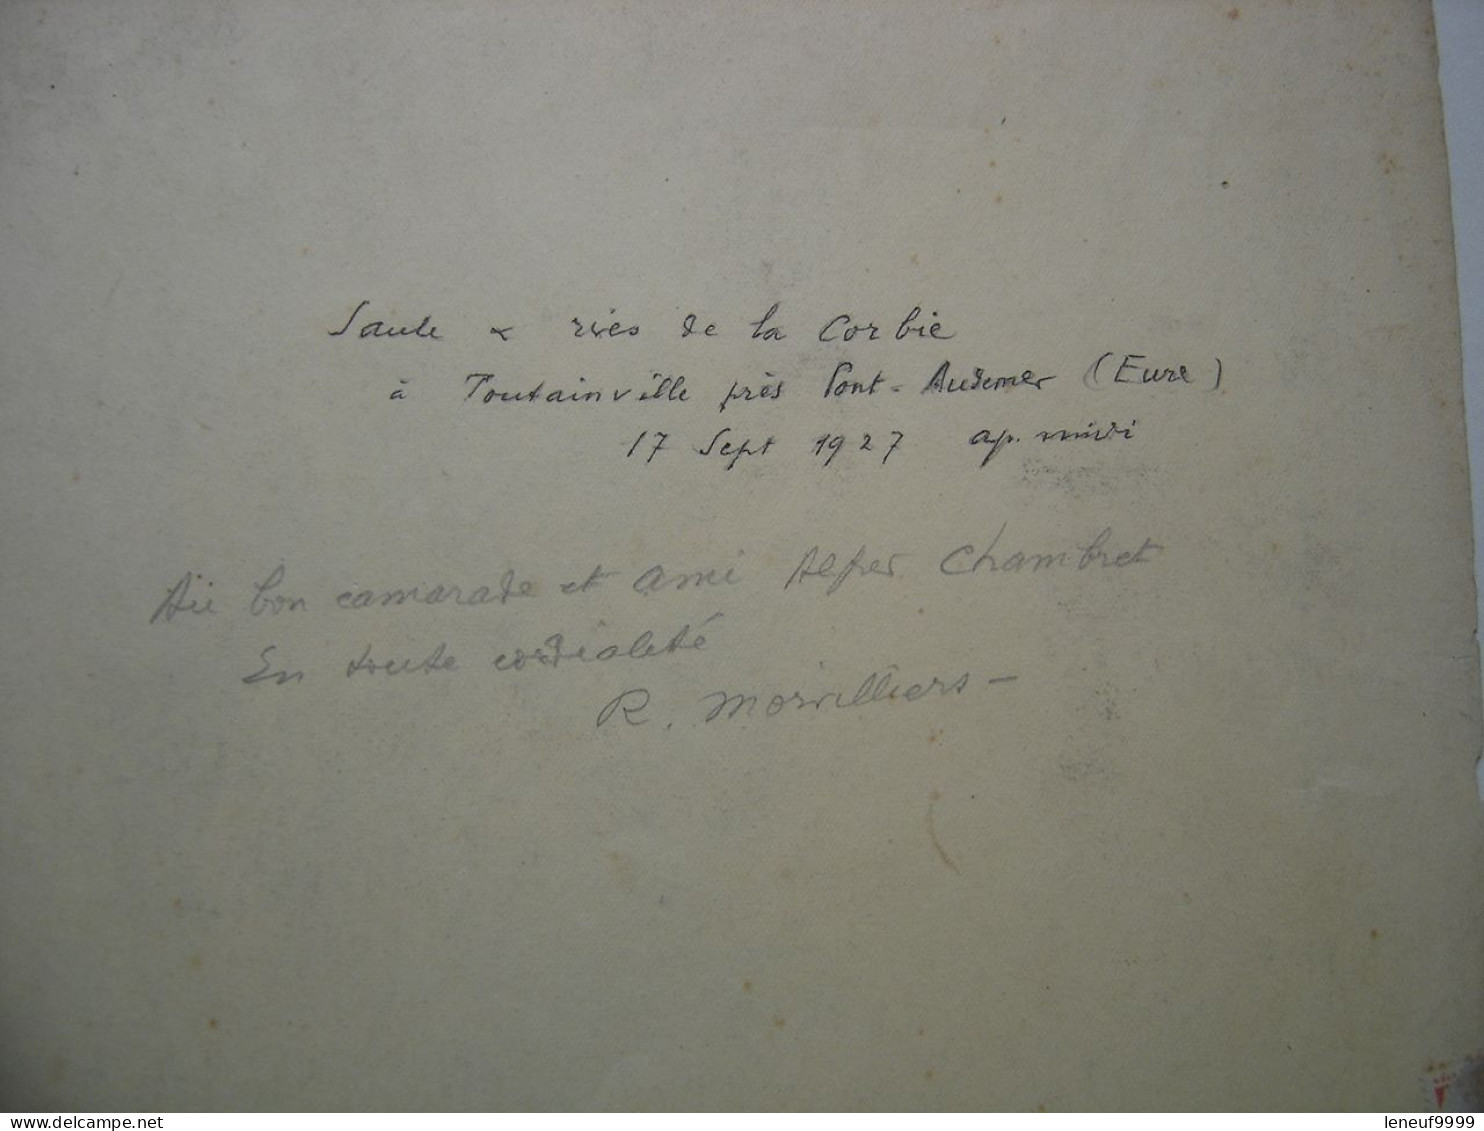 Estampe Signee Et Dedicacee R MORVILLIERS 1927 Situee Dans L'Eure Corbie Toutainville - Arte Contemporanea